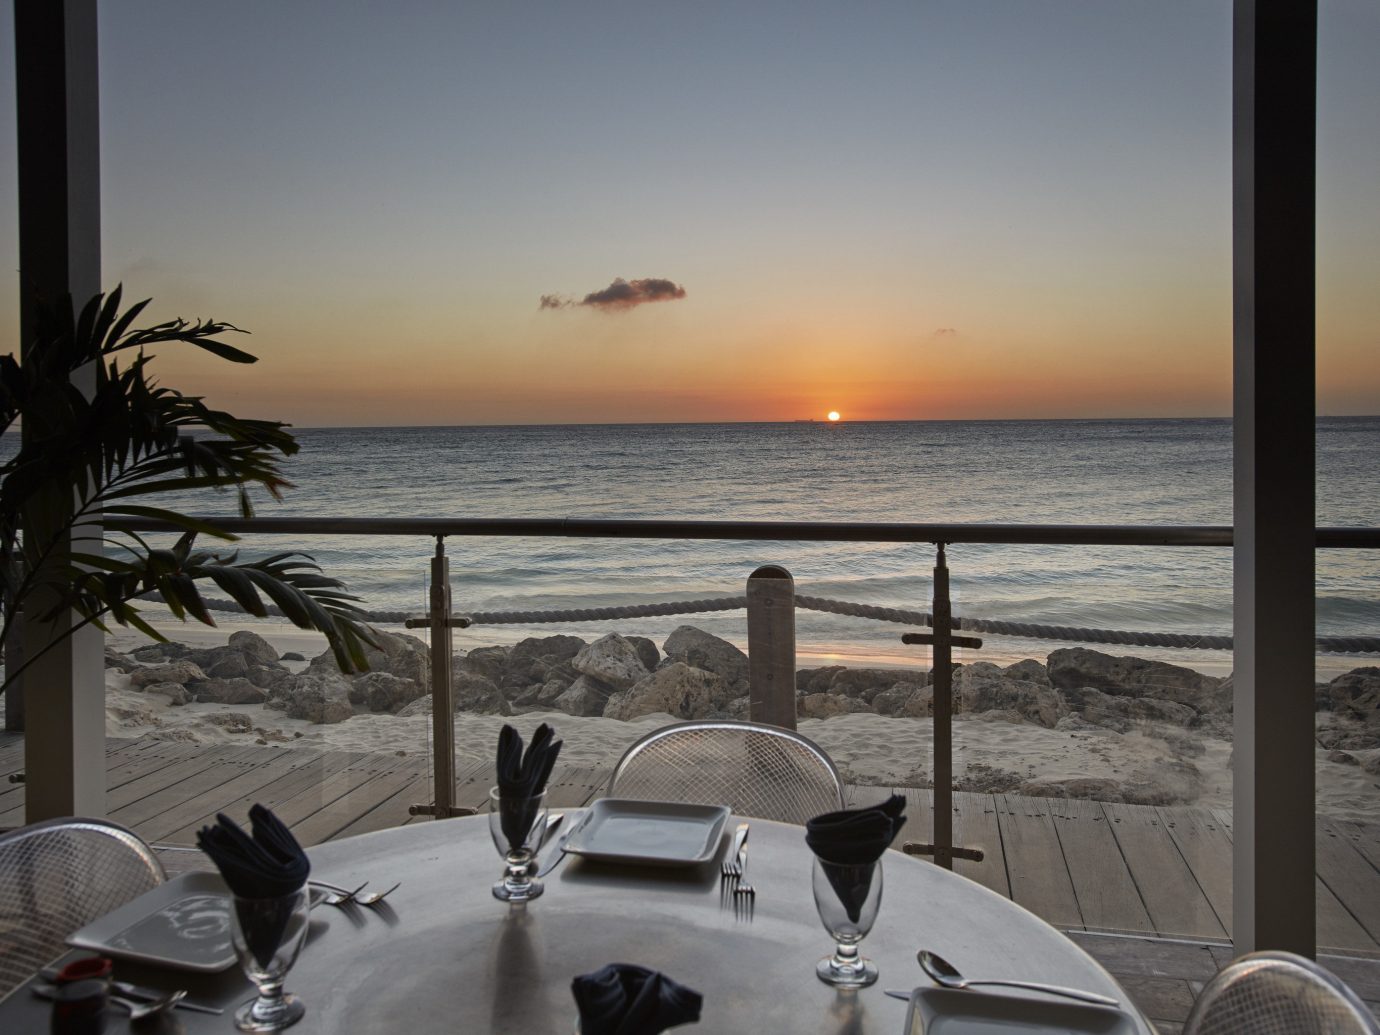 Hotels sky water outdoor Ocean Sea Beach shore vacation Coast morning Sunset evening overlooking